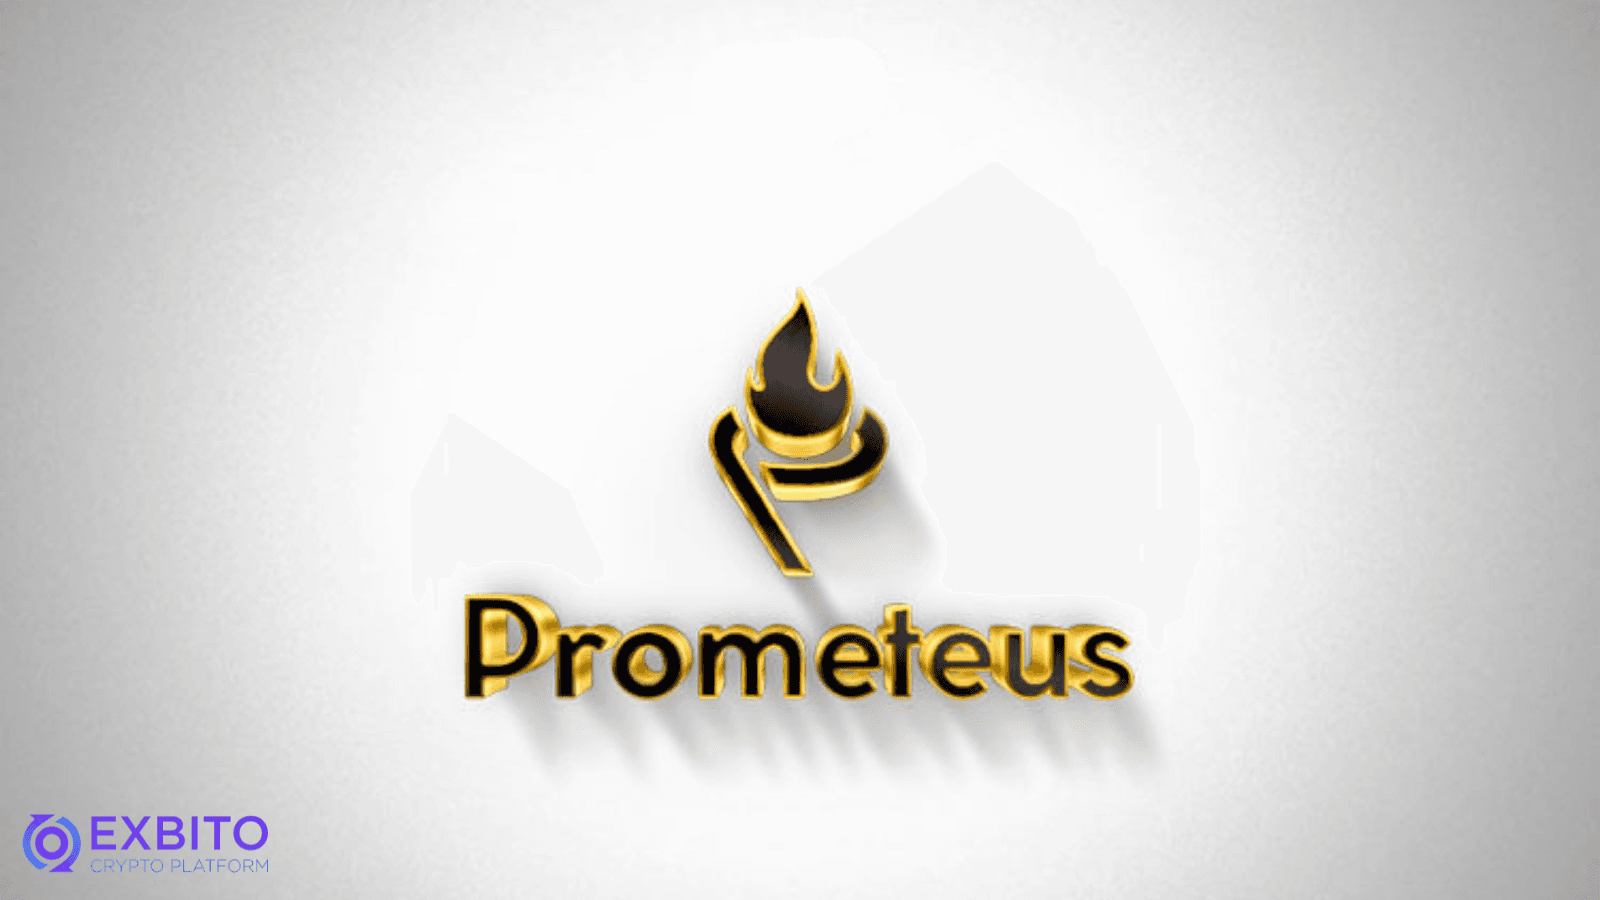 پرومتئوس (Prometeus) چیست؟